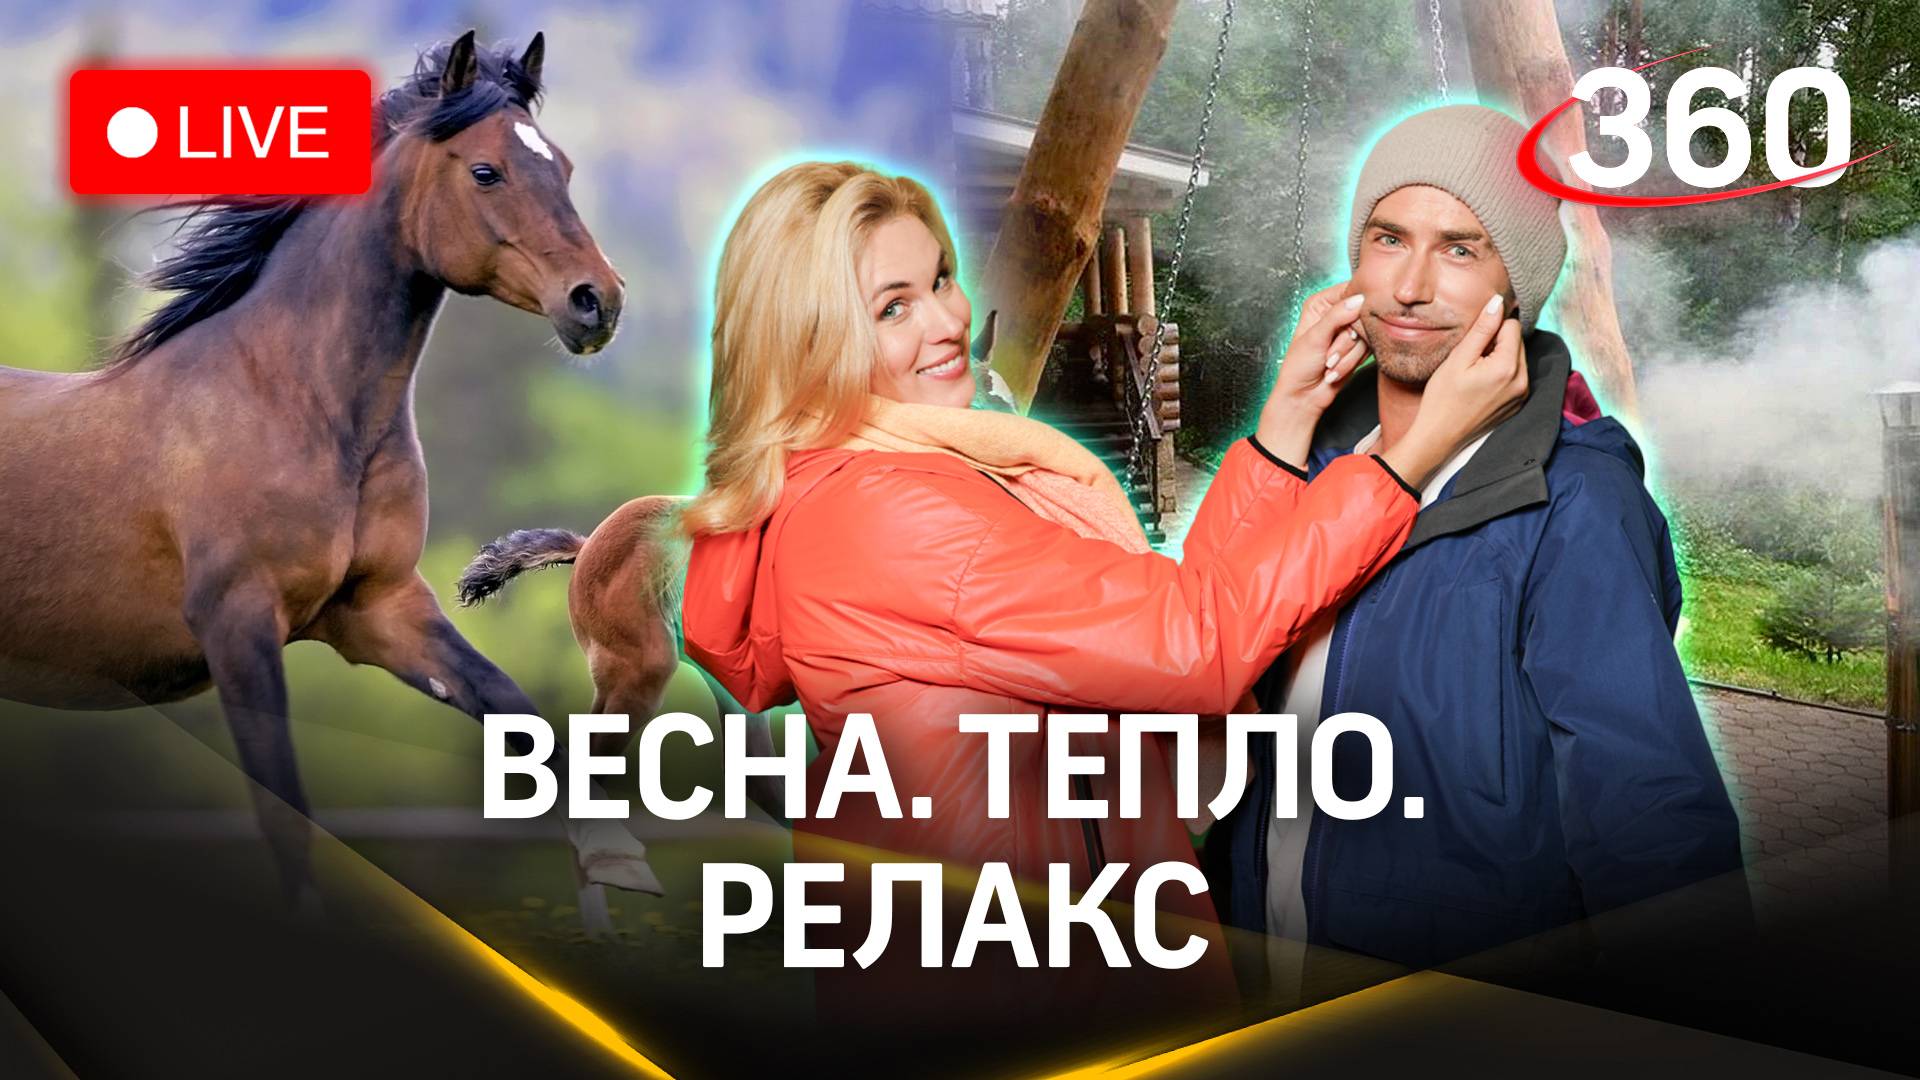 Метеострим 360: конные прогулки и сибирский чан | Шубенков и Засобина